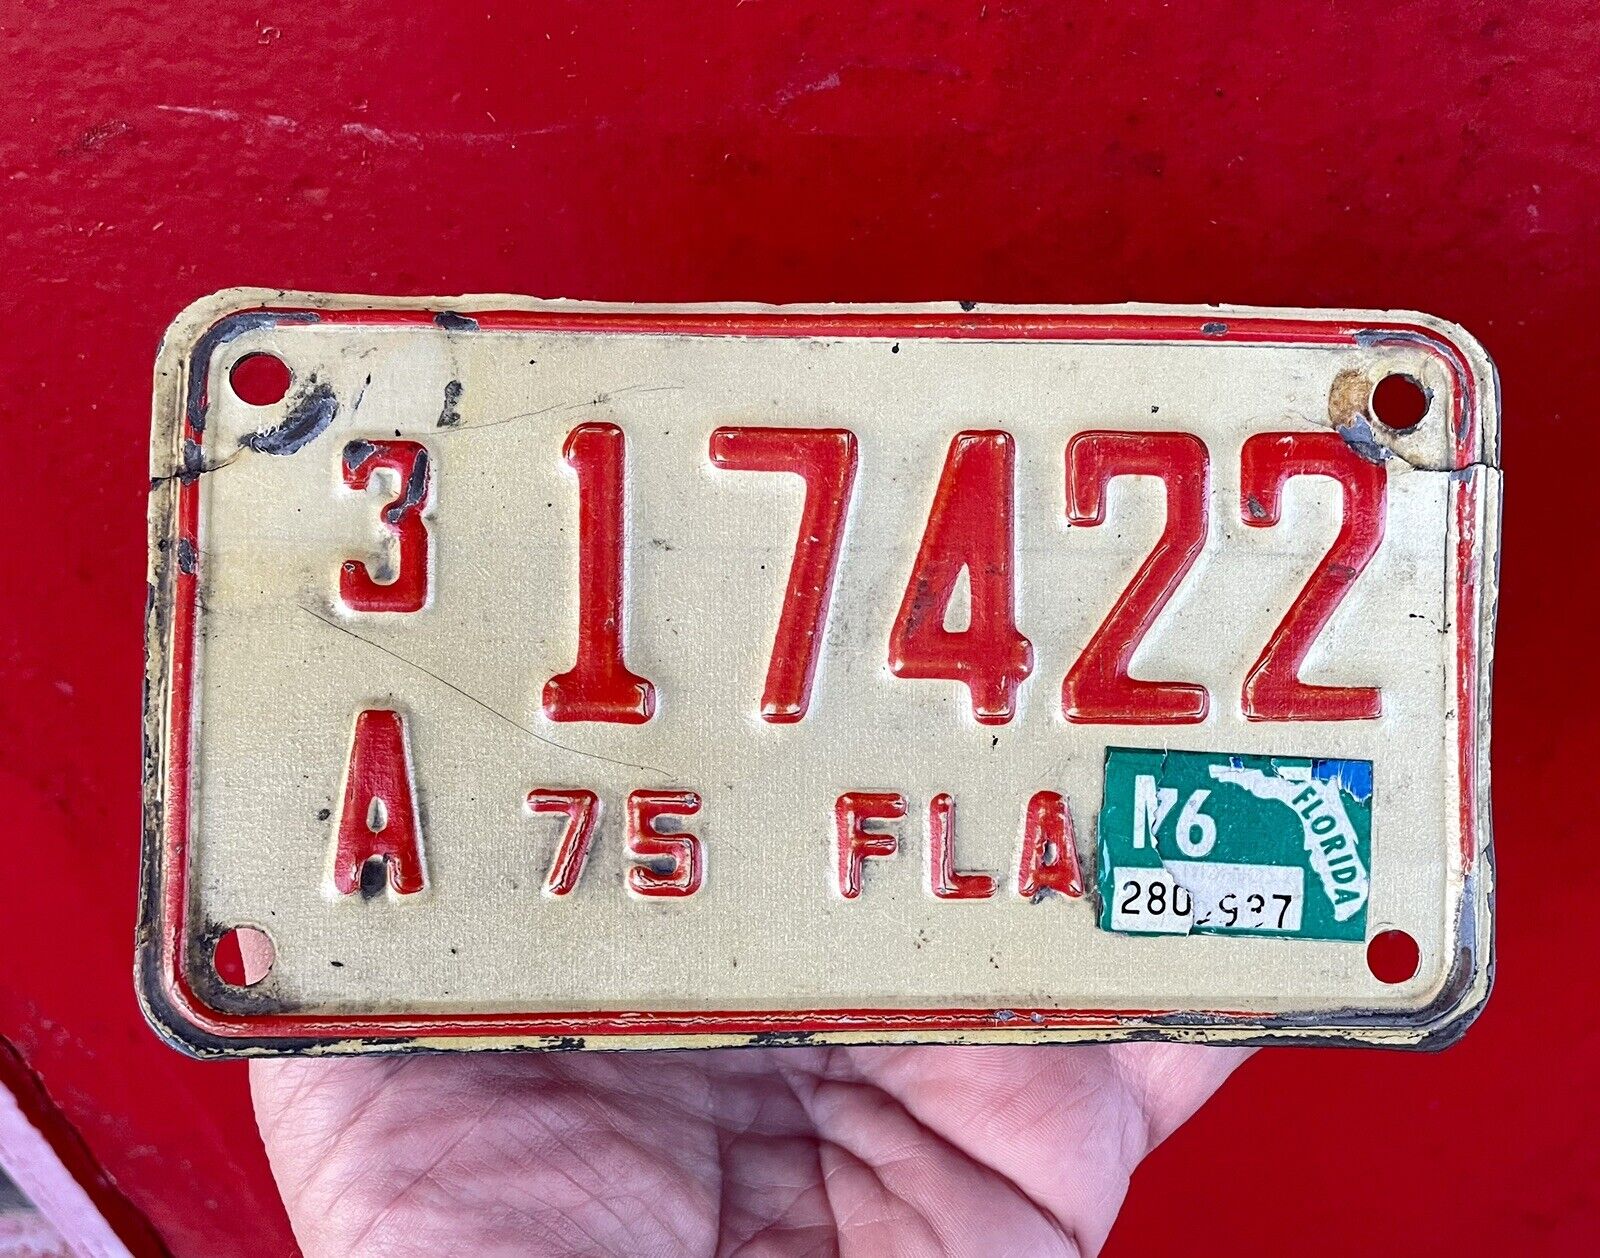 1975 Florida Motorcycle license plate, Vintage Tag